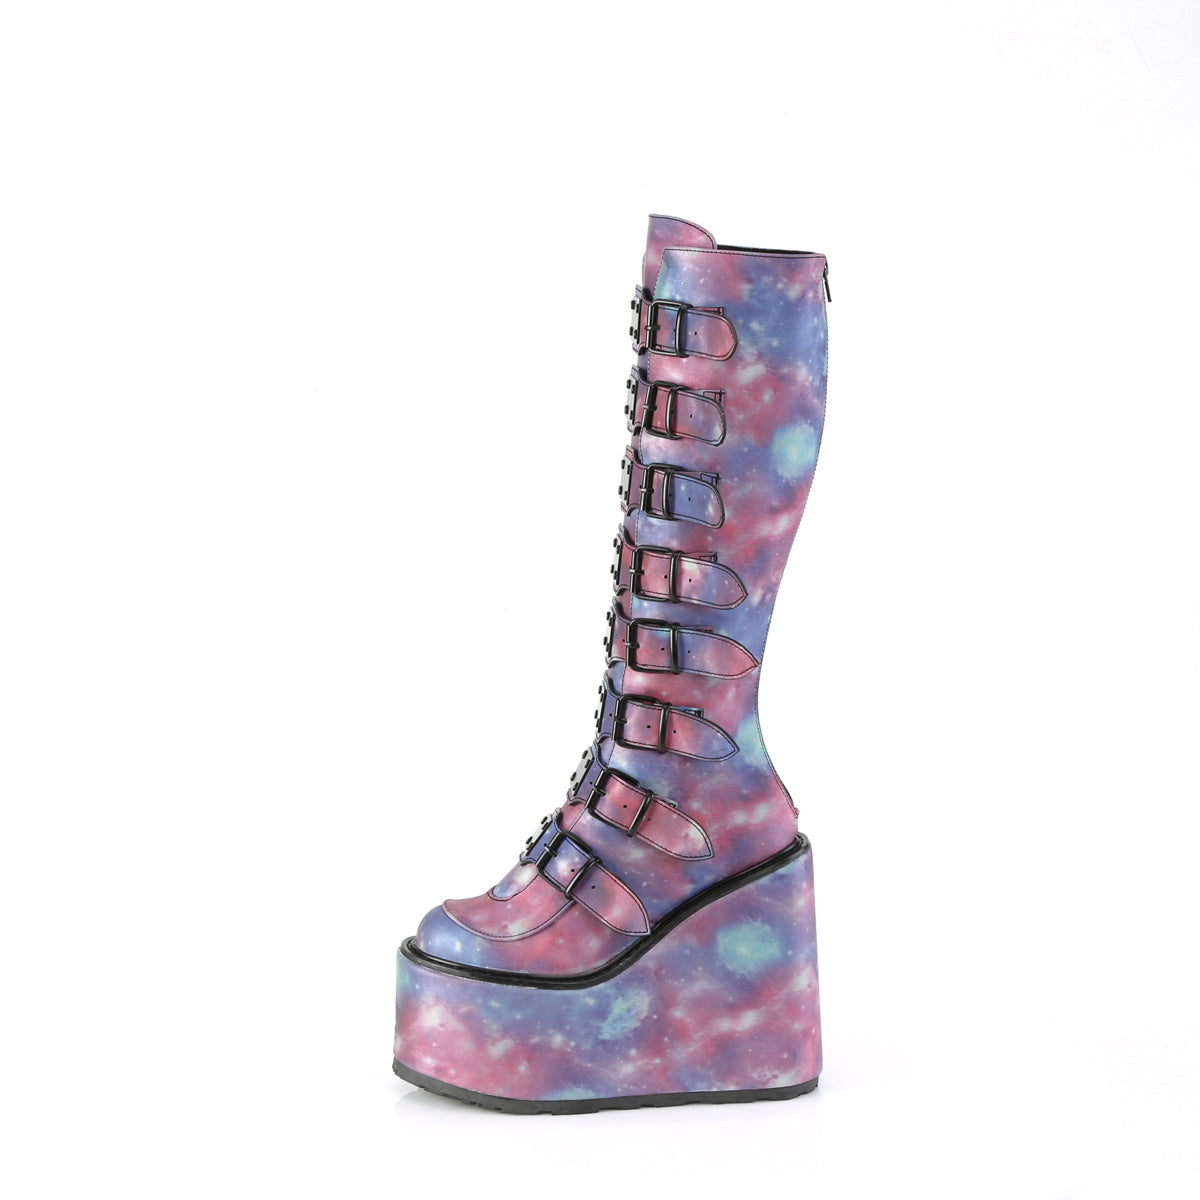 SWING-815 Demonia Purple-Blue Reflective Vegan Leather Women's Mid-Calf & Knee High Boots [Alternative Footwear]